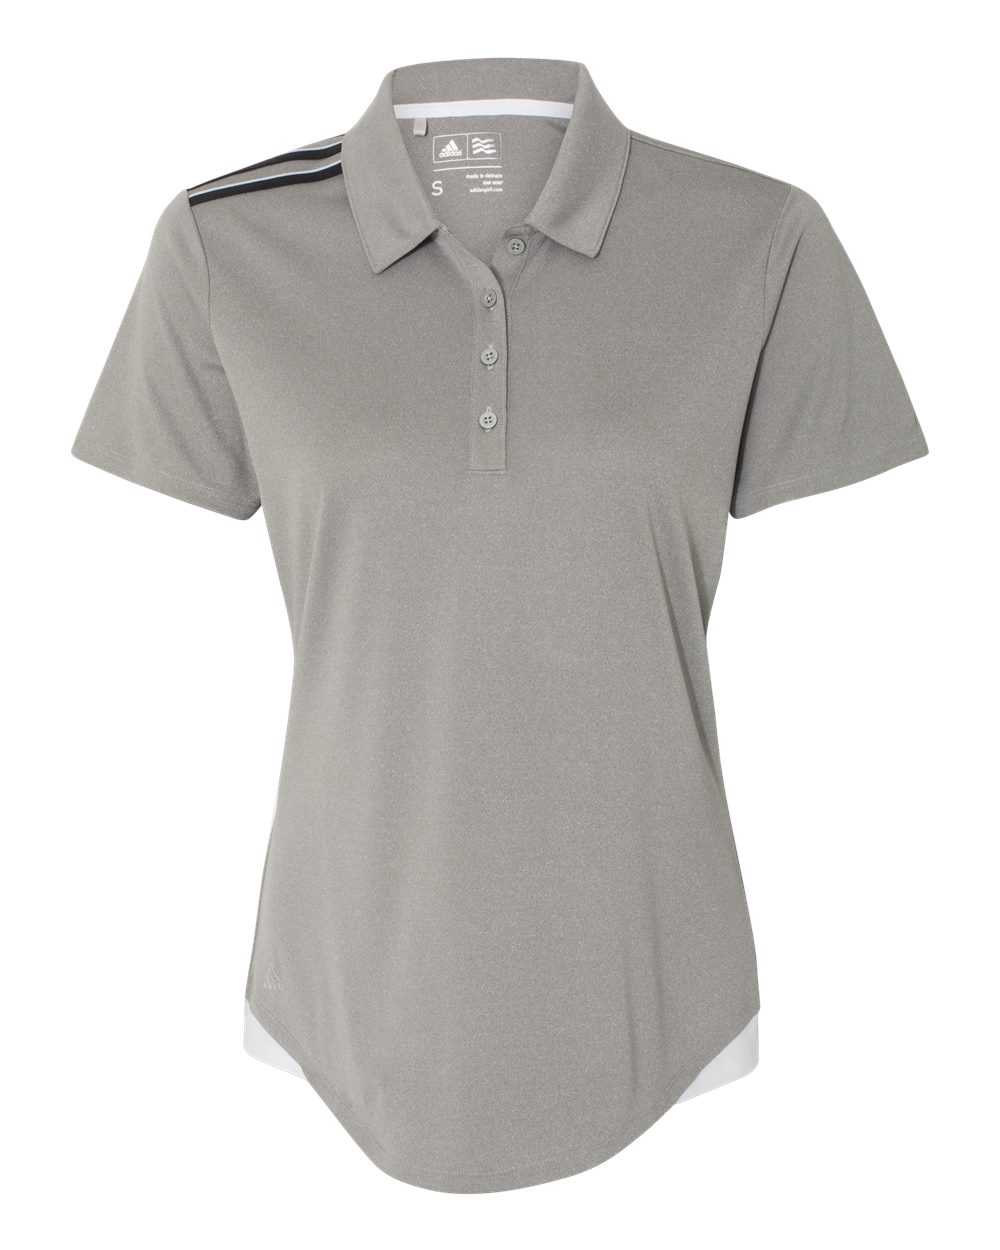 Adidas A235 Women's 3-Stripes Shoulder Sport Shirt - Medium Grey Heather Black Mid Grey - HIT a Double